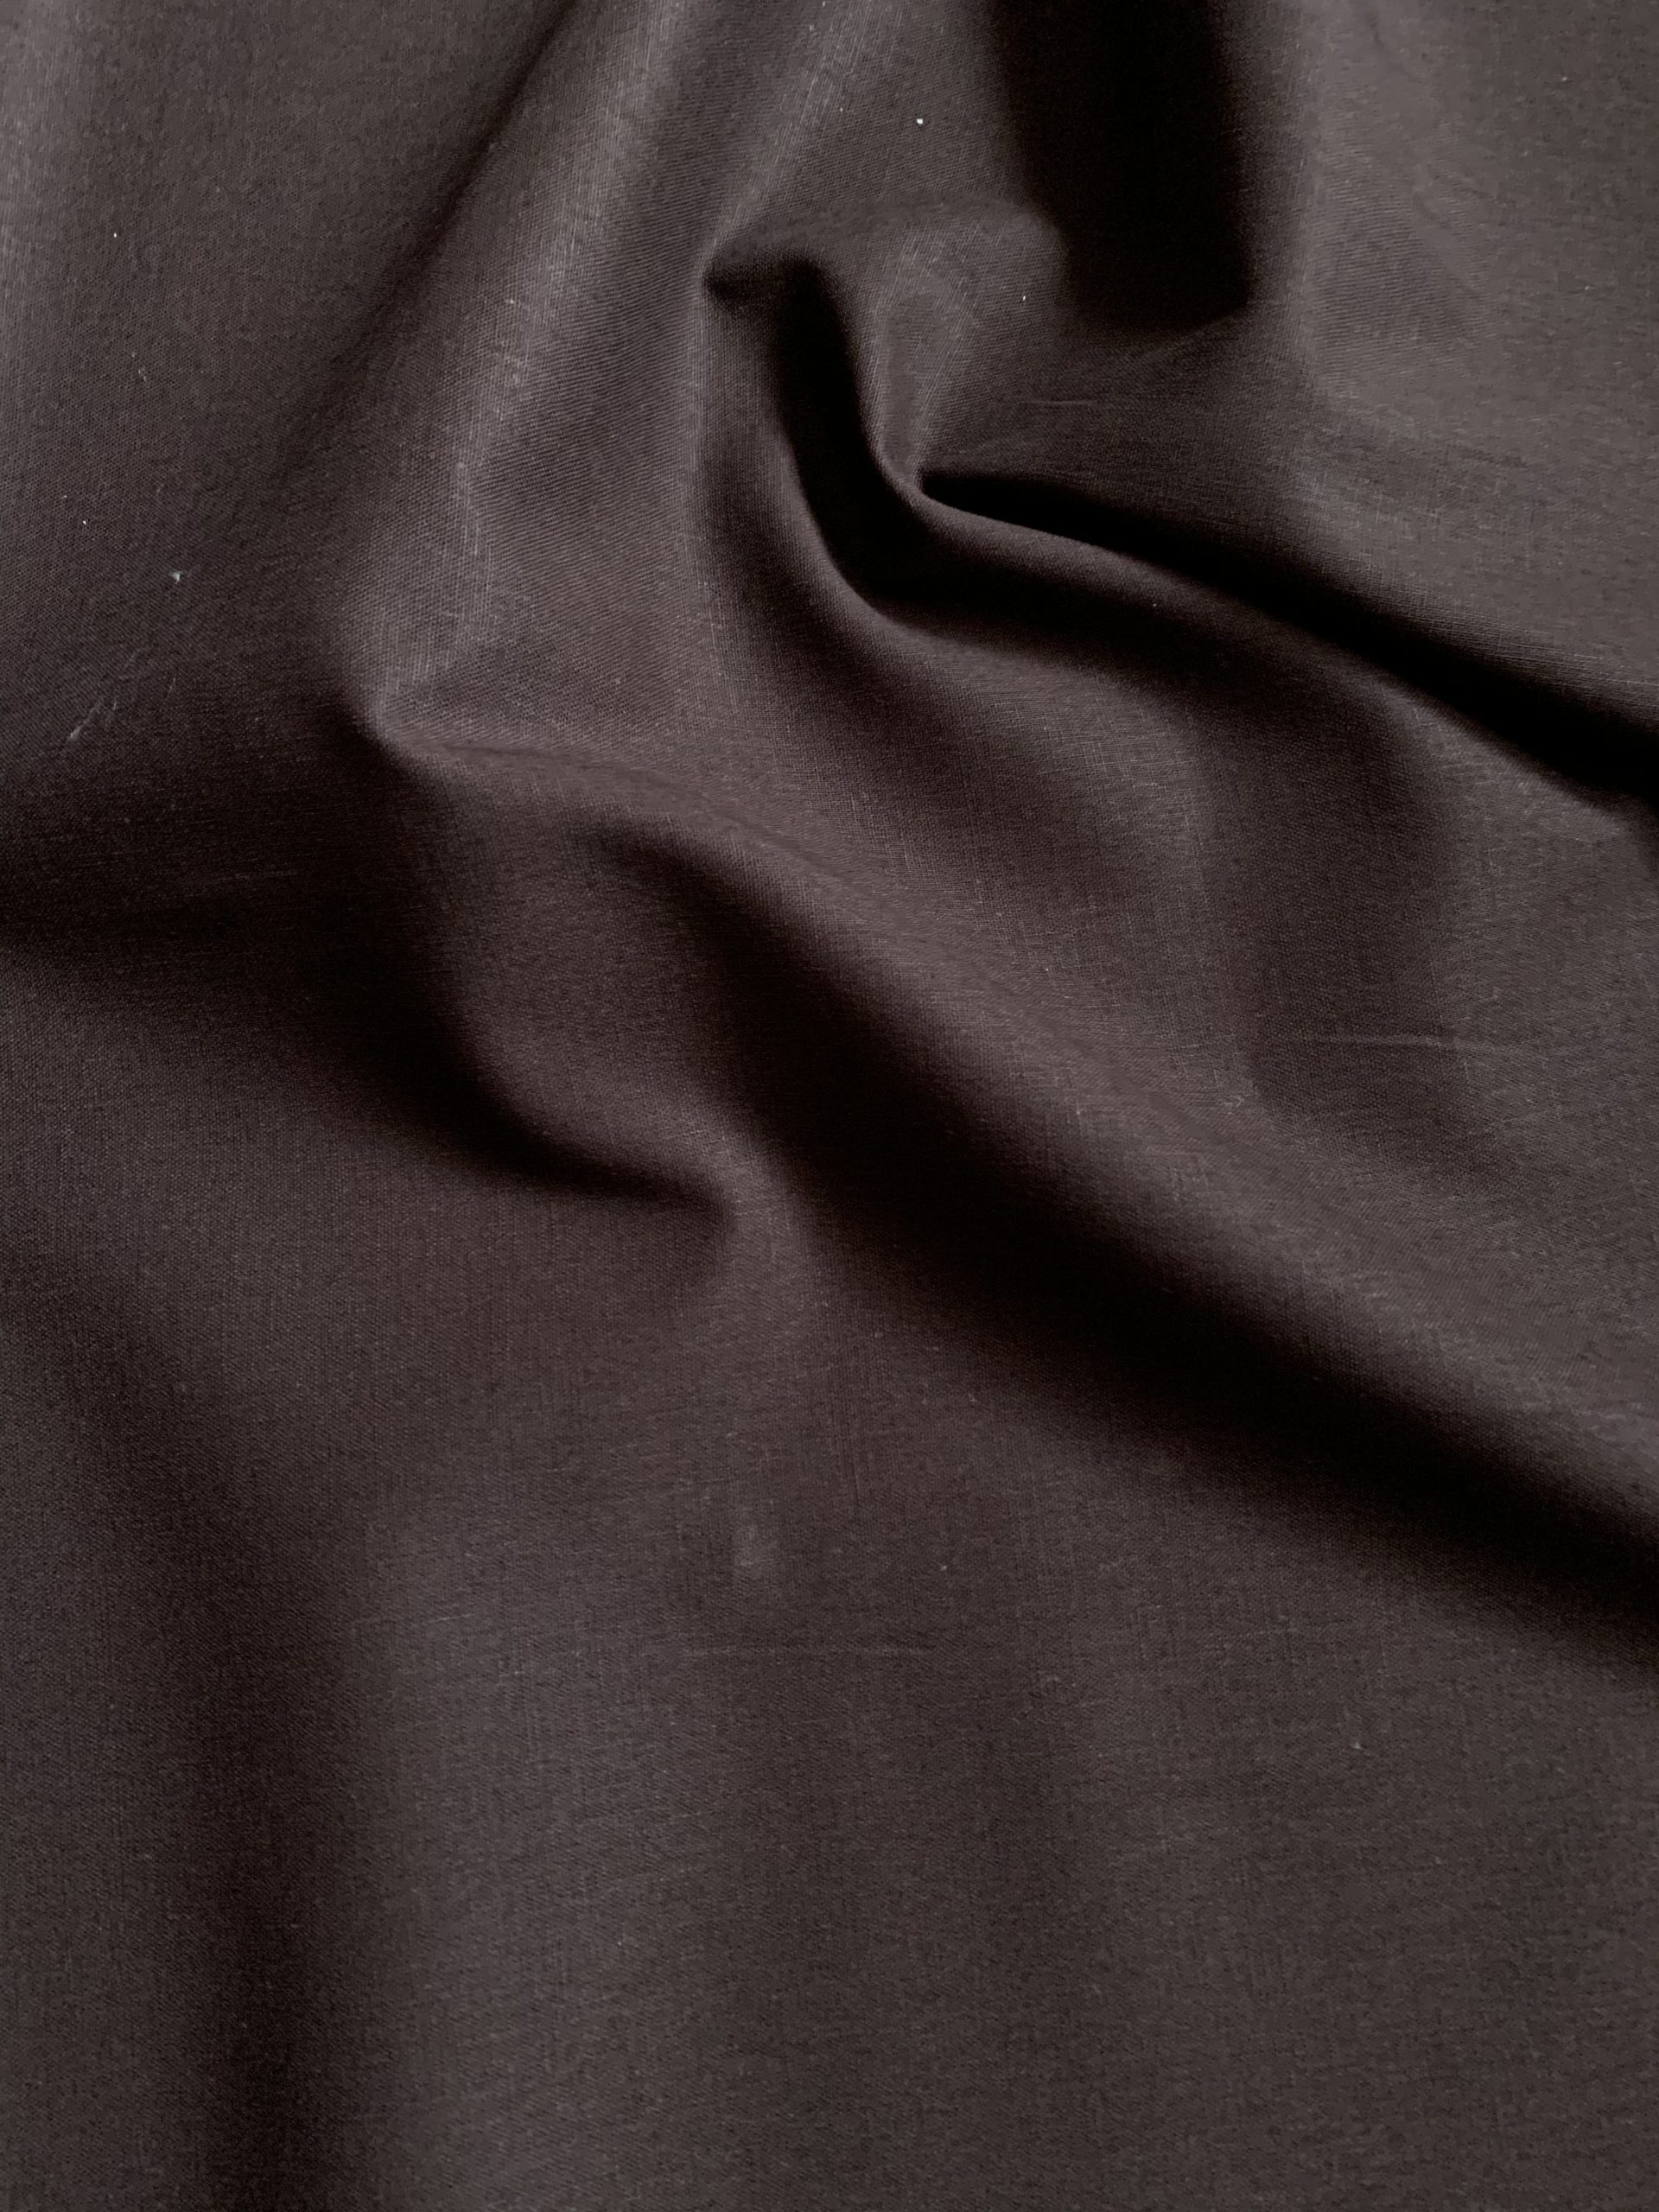 Rc521a Dark Brown Soft Pure Cotton Fabric Cushion Cover/Pillow Case*Custom Size*